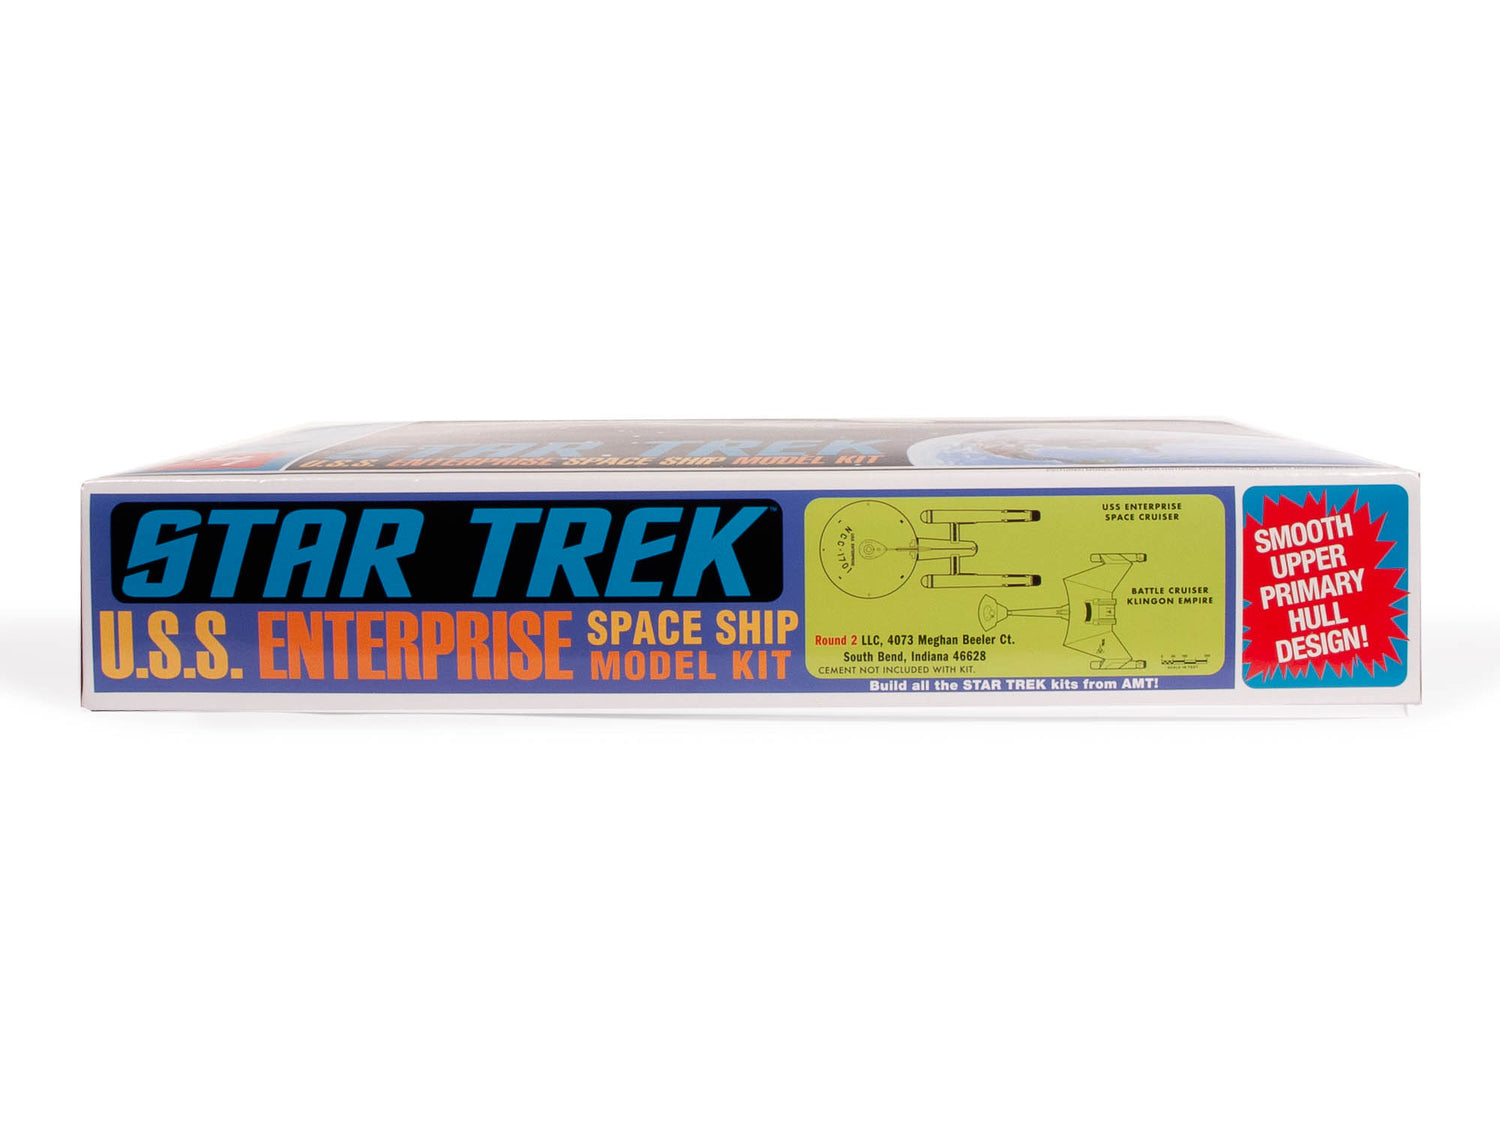 AMT Star Trek Classic U.S.S. Enterprise 1:650 Scale Model Kit